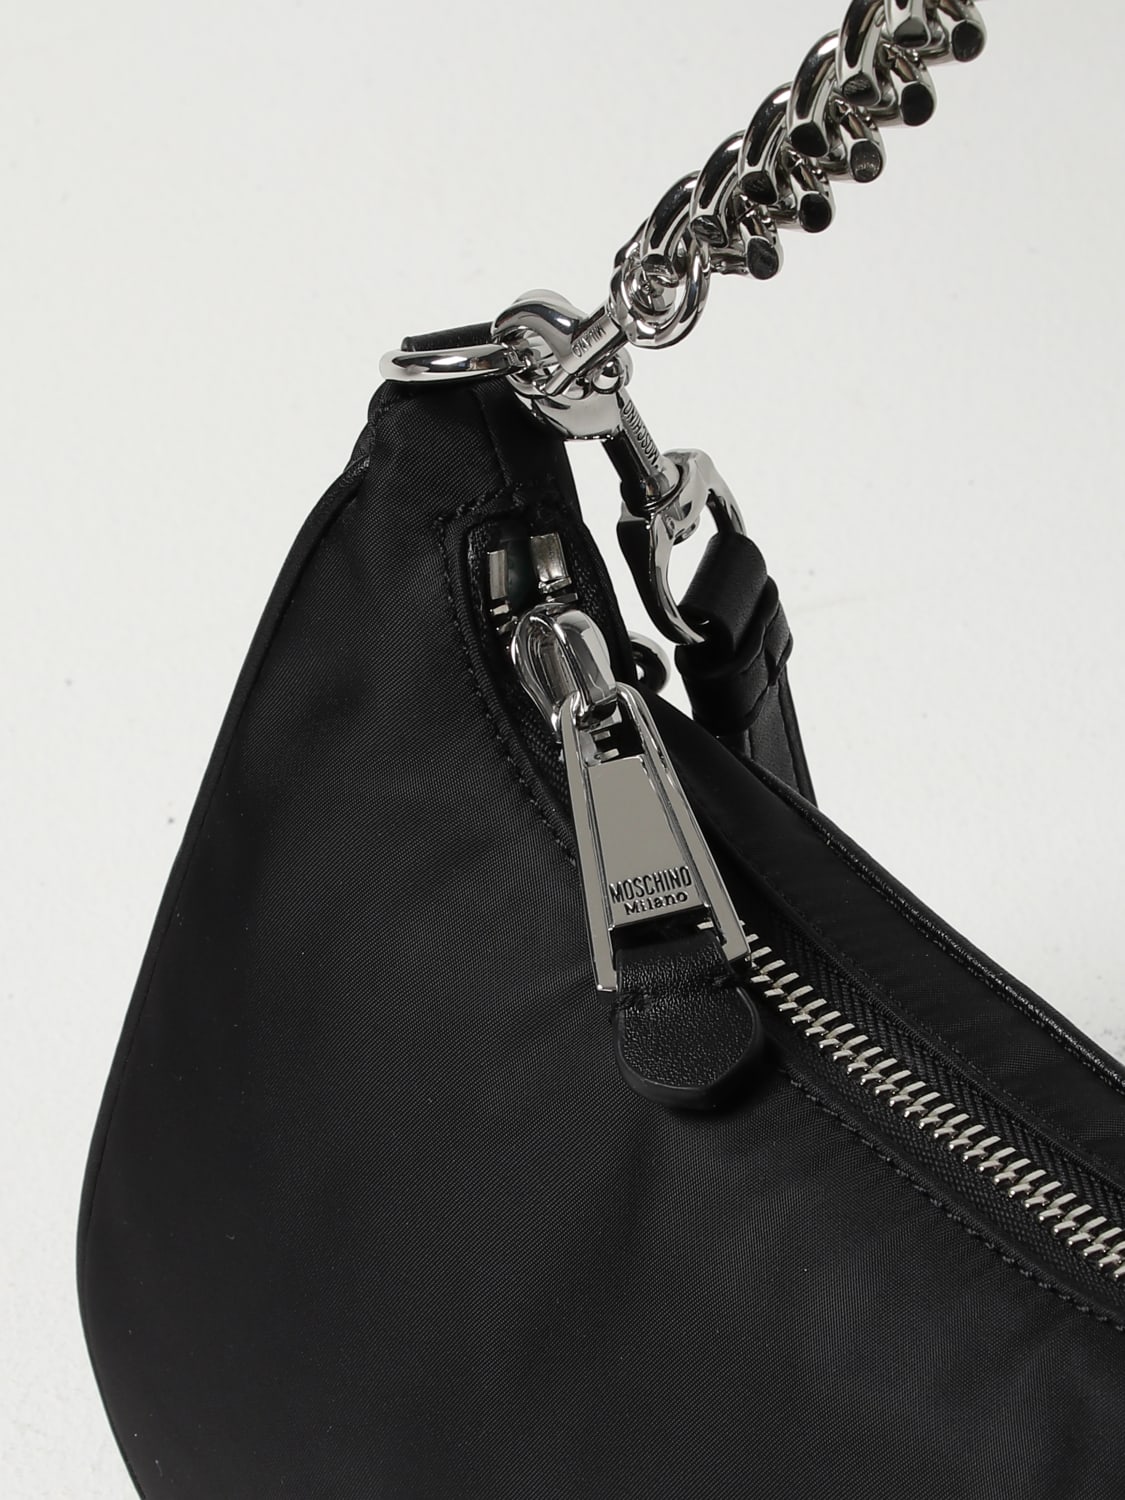 MOSCHINO COUTURE: nylon hobo bag - Fuchsia  Moschino Couture shoulder bag  74098202 online at